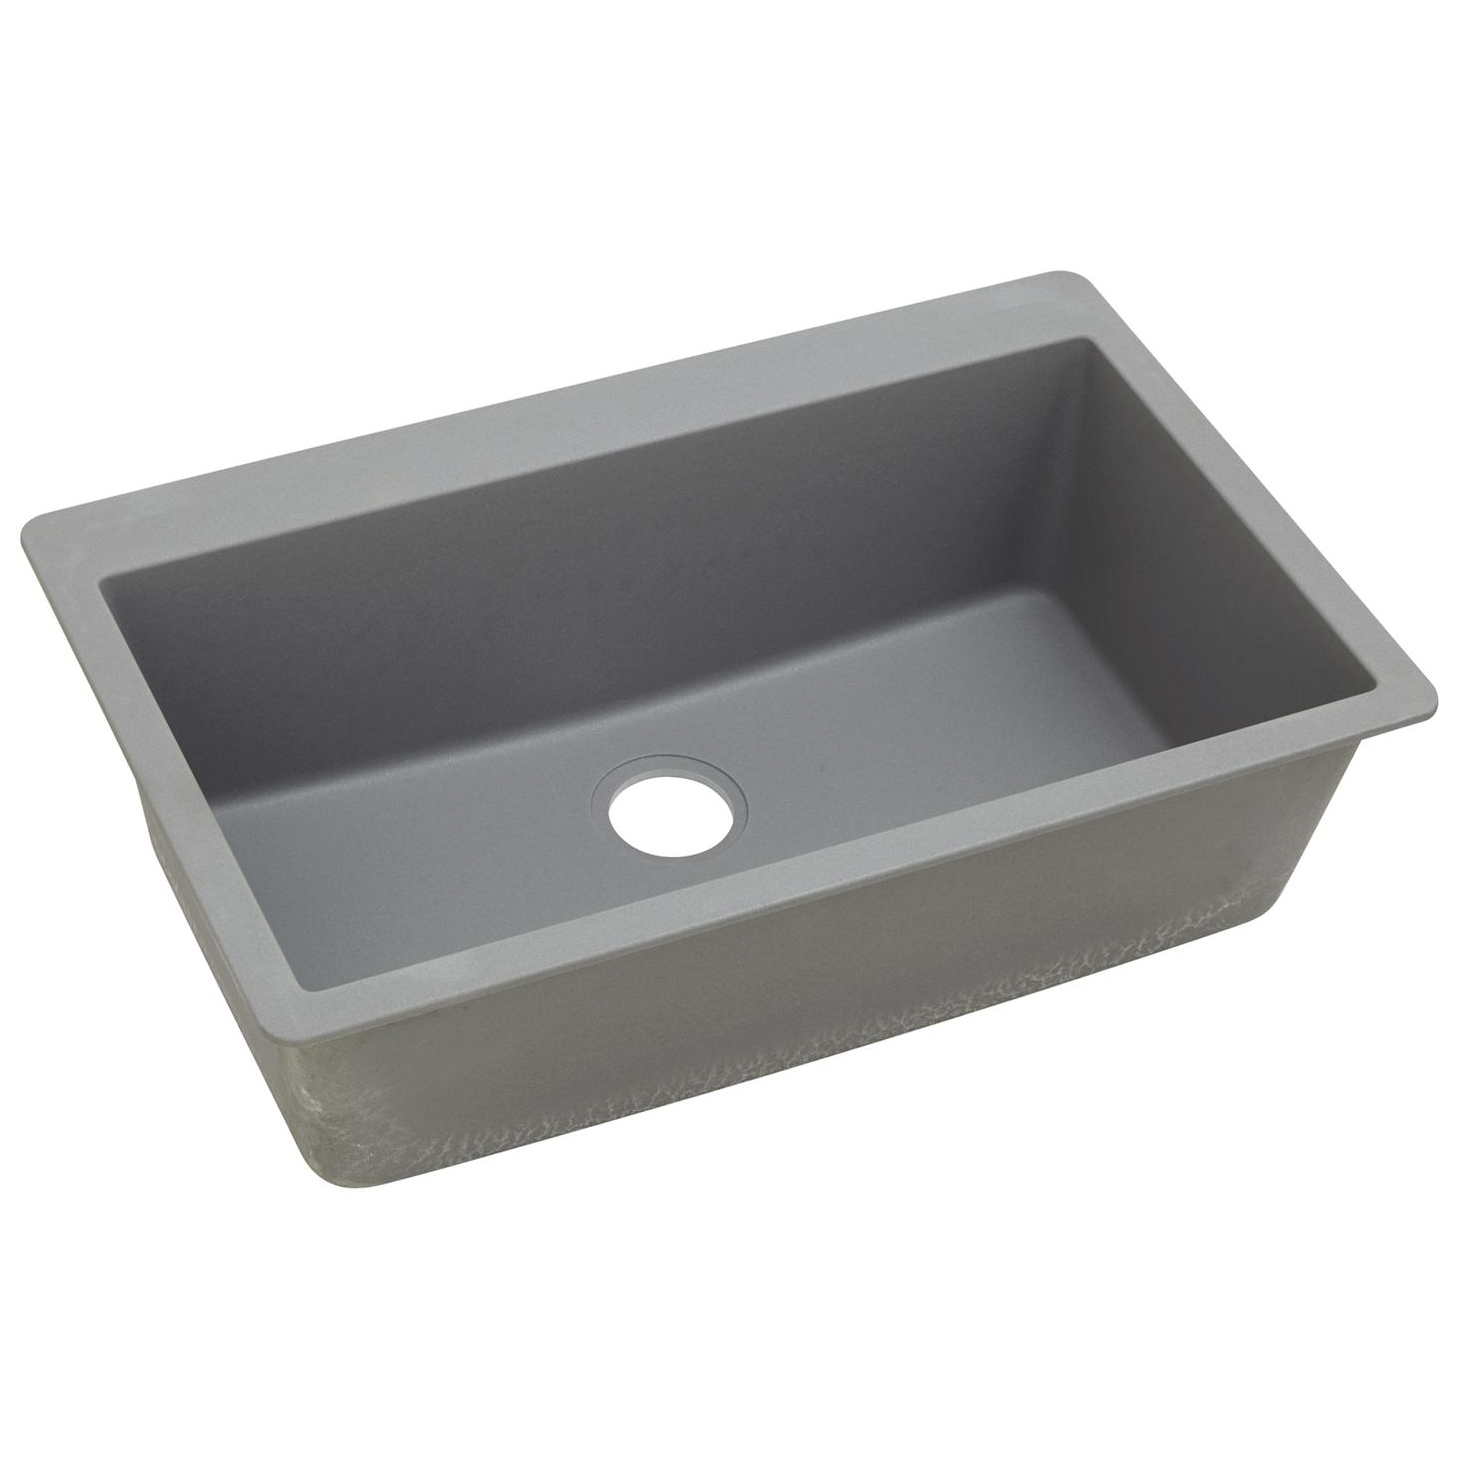 Quartz Classic 33x20-7/8x9-7/16" Single Bowl Sink, Greystone